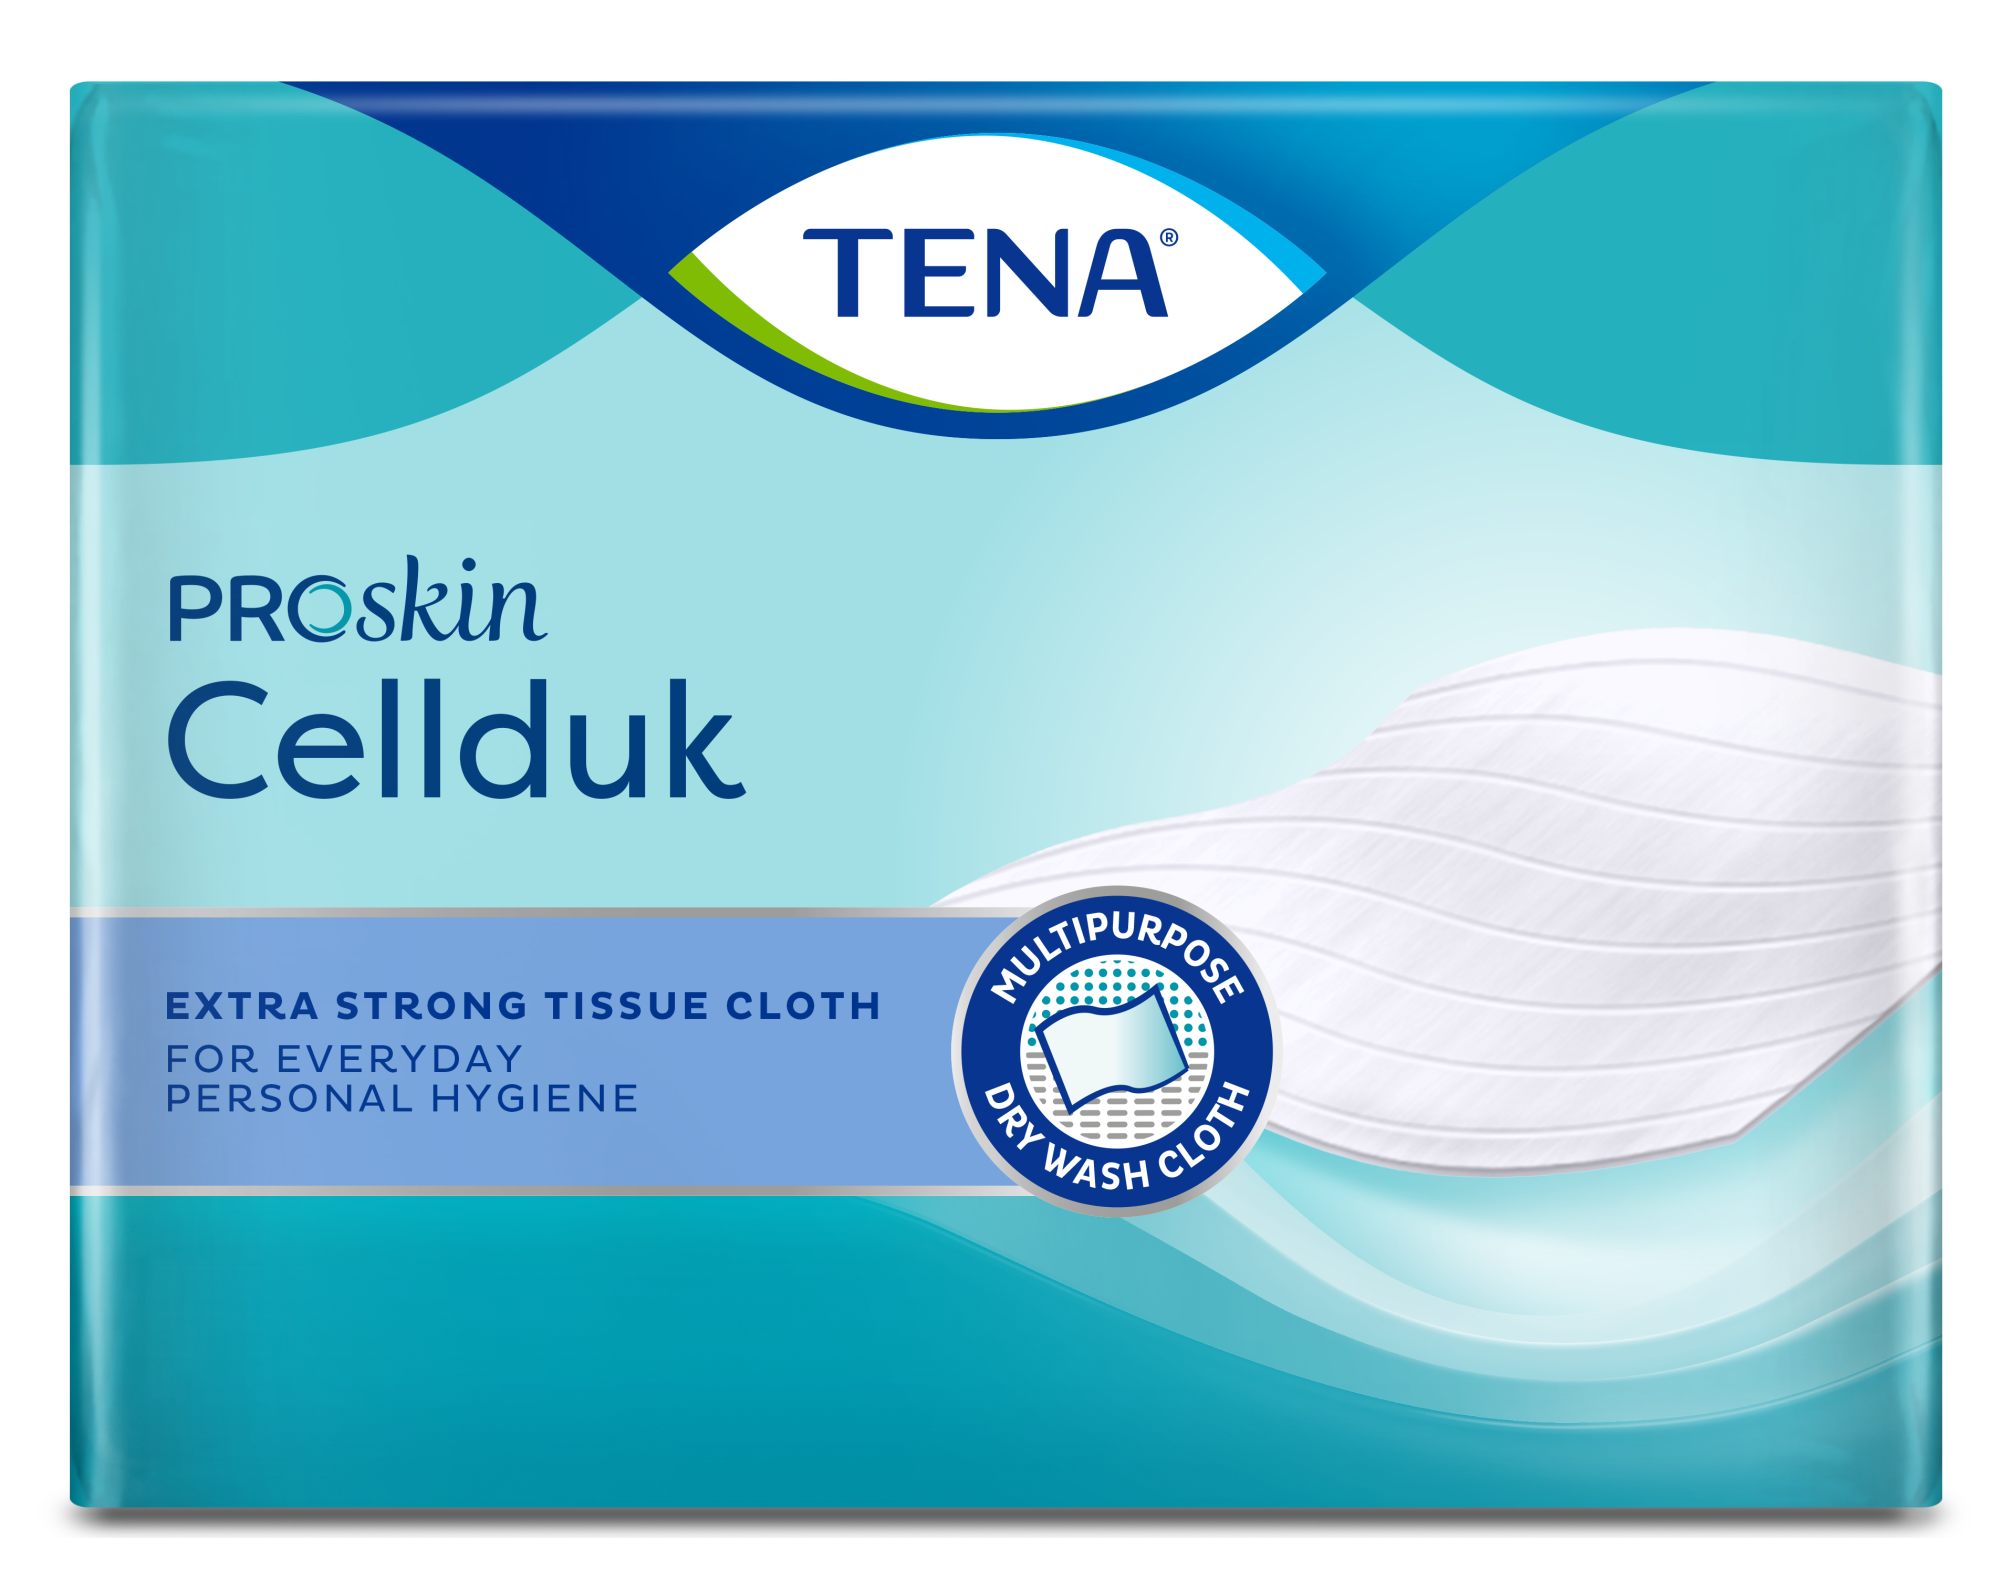 TENA ProSkin Cellduk - Suhe krpice 